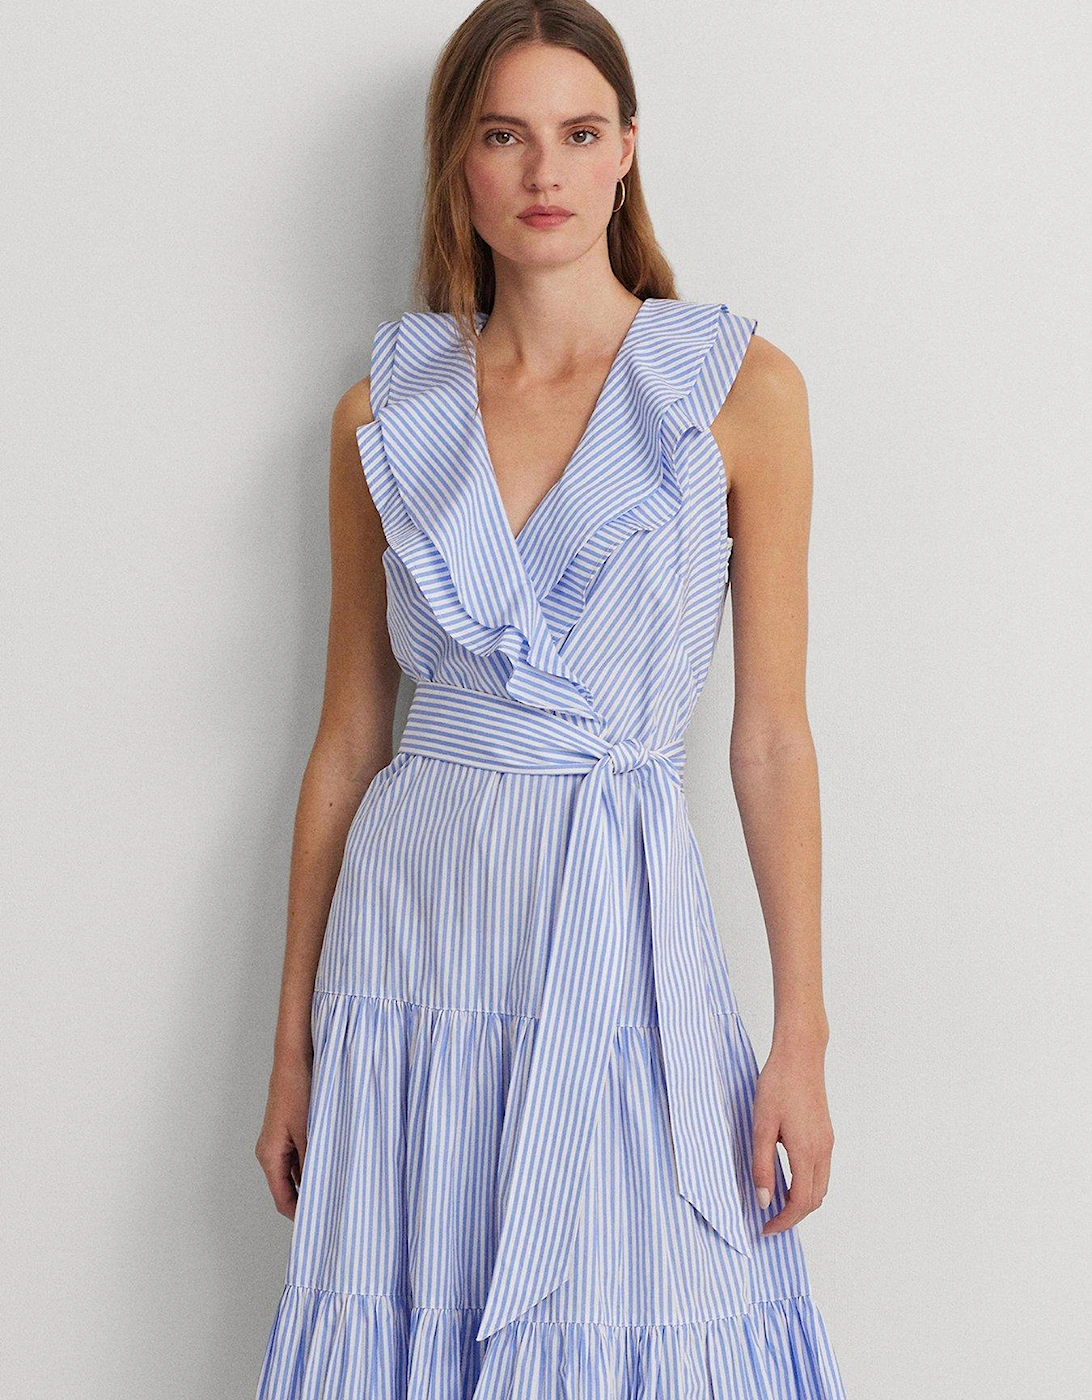 Tabraelin Stripe Sleeveless Dress - Blue, 5 of 4